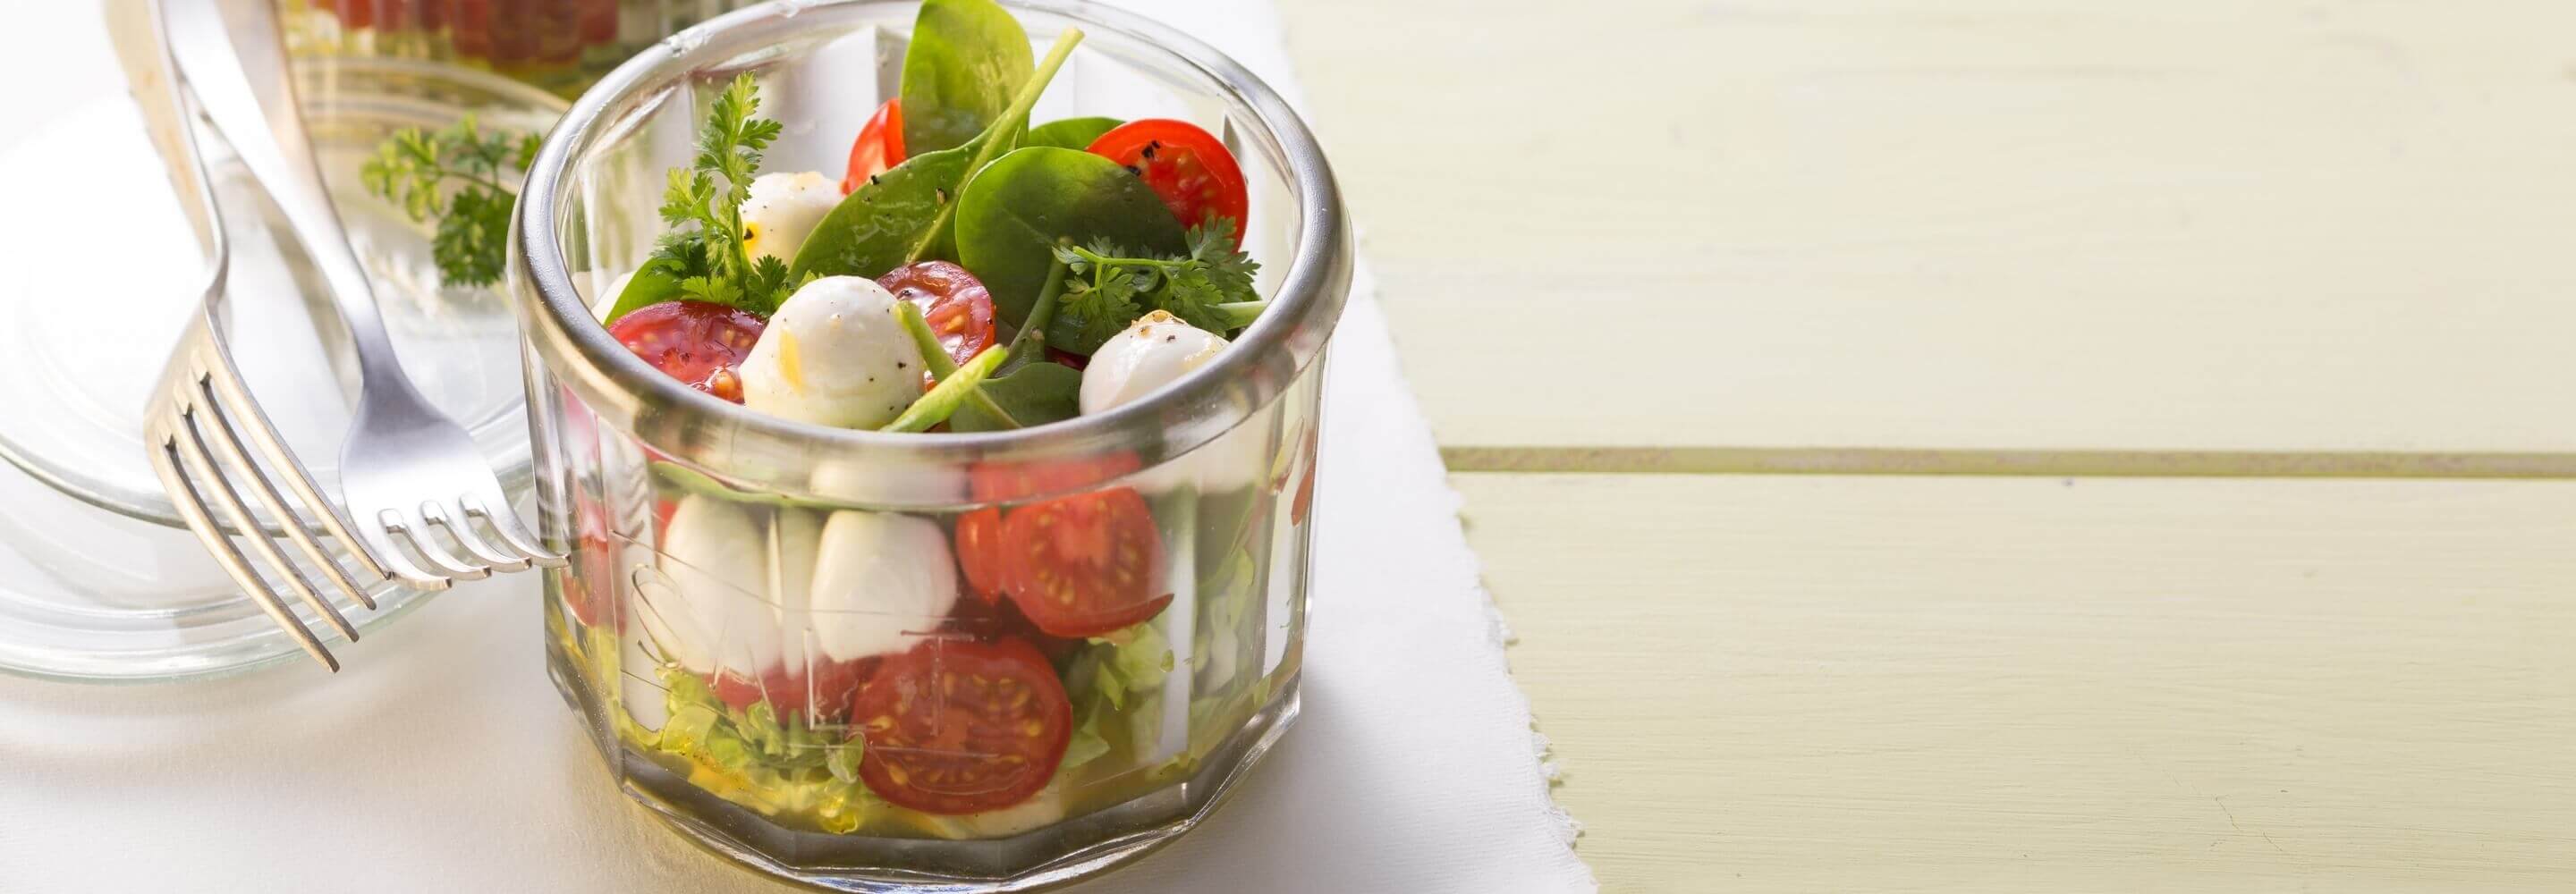 Mozzarella Mini Caprese Salat im Glas